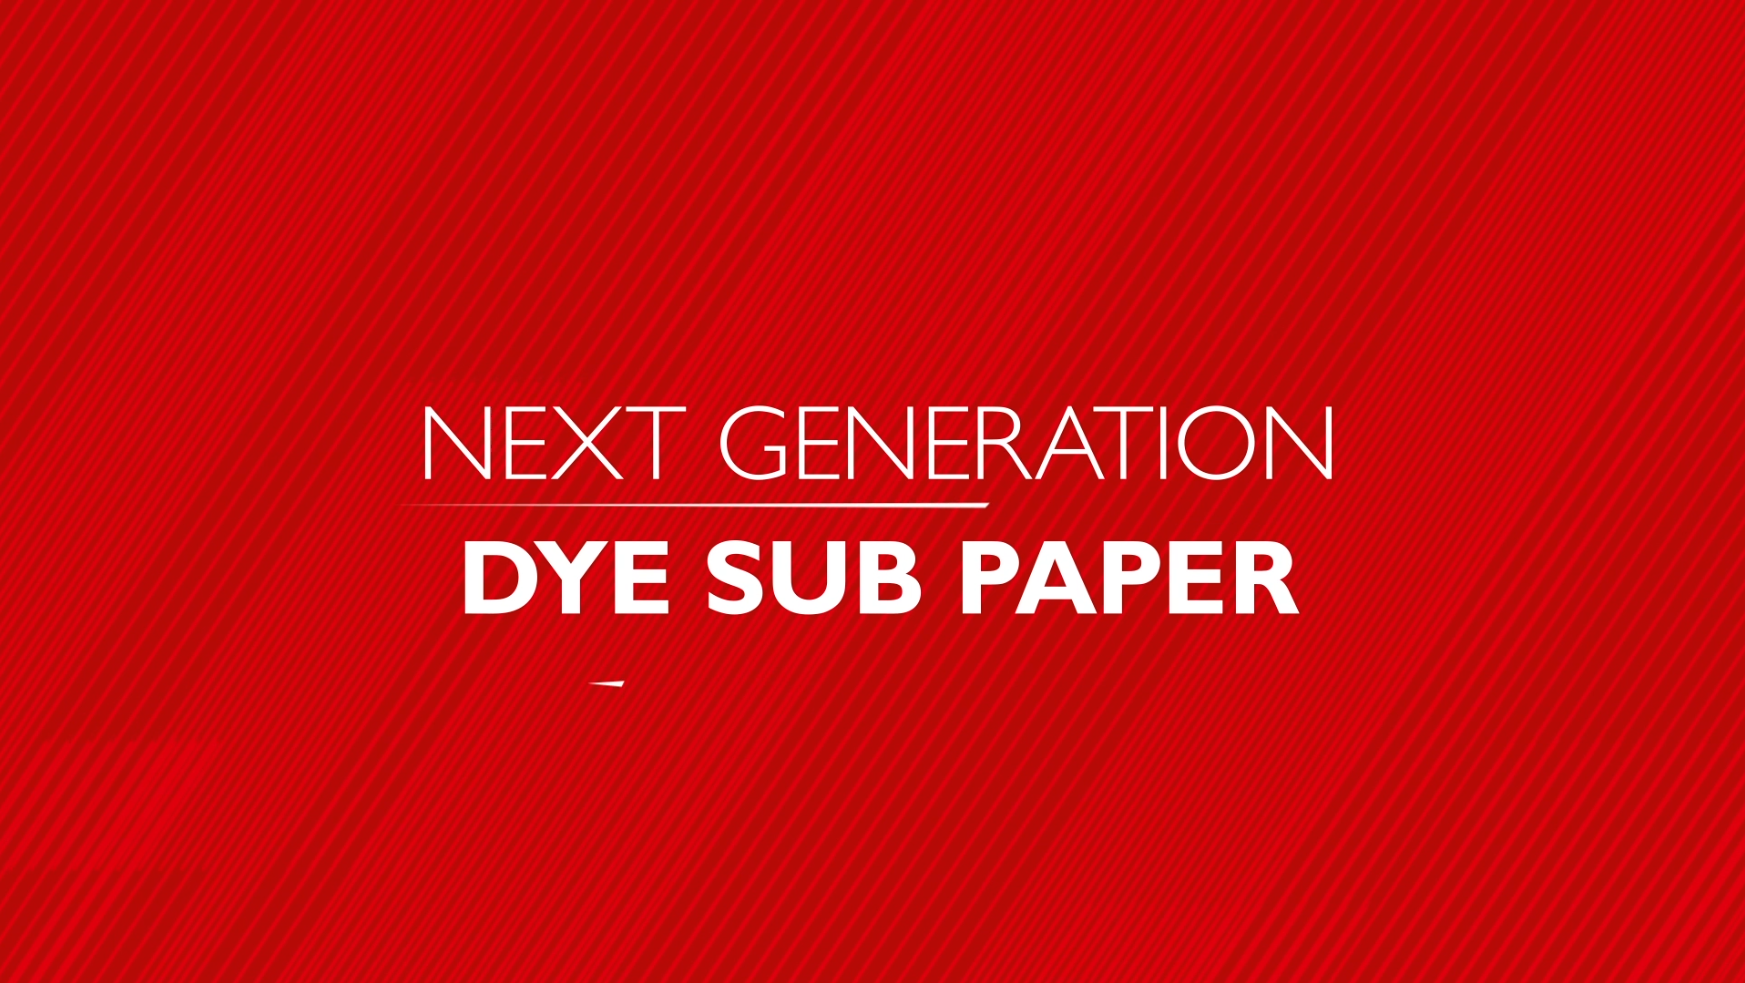 S-RACE Dye Sublimation Paper - Brand Trailer Video